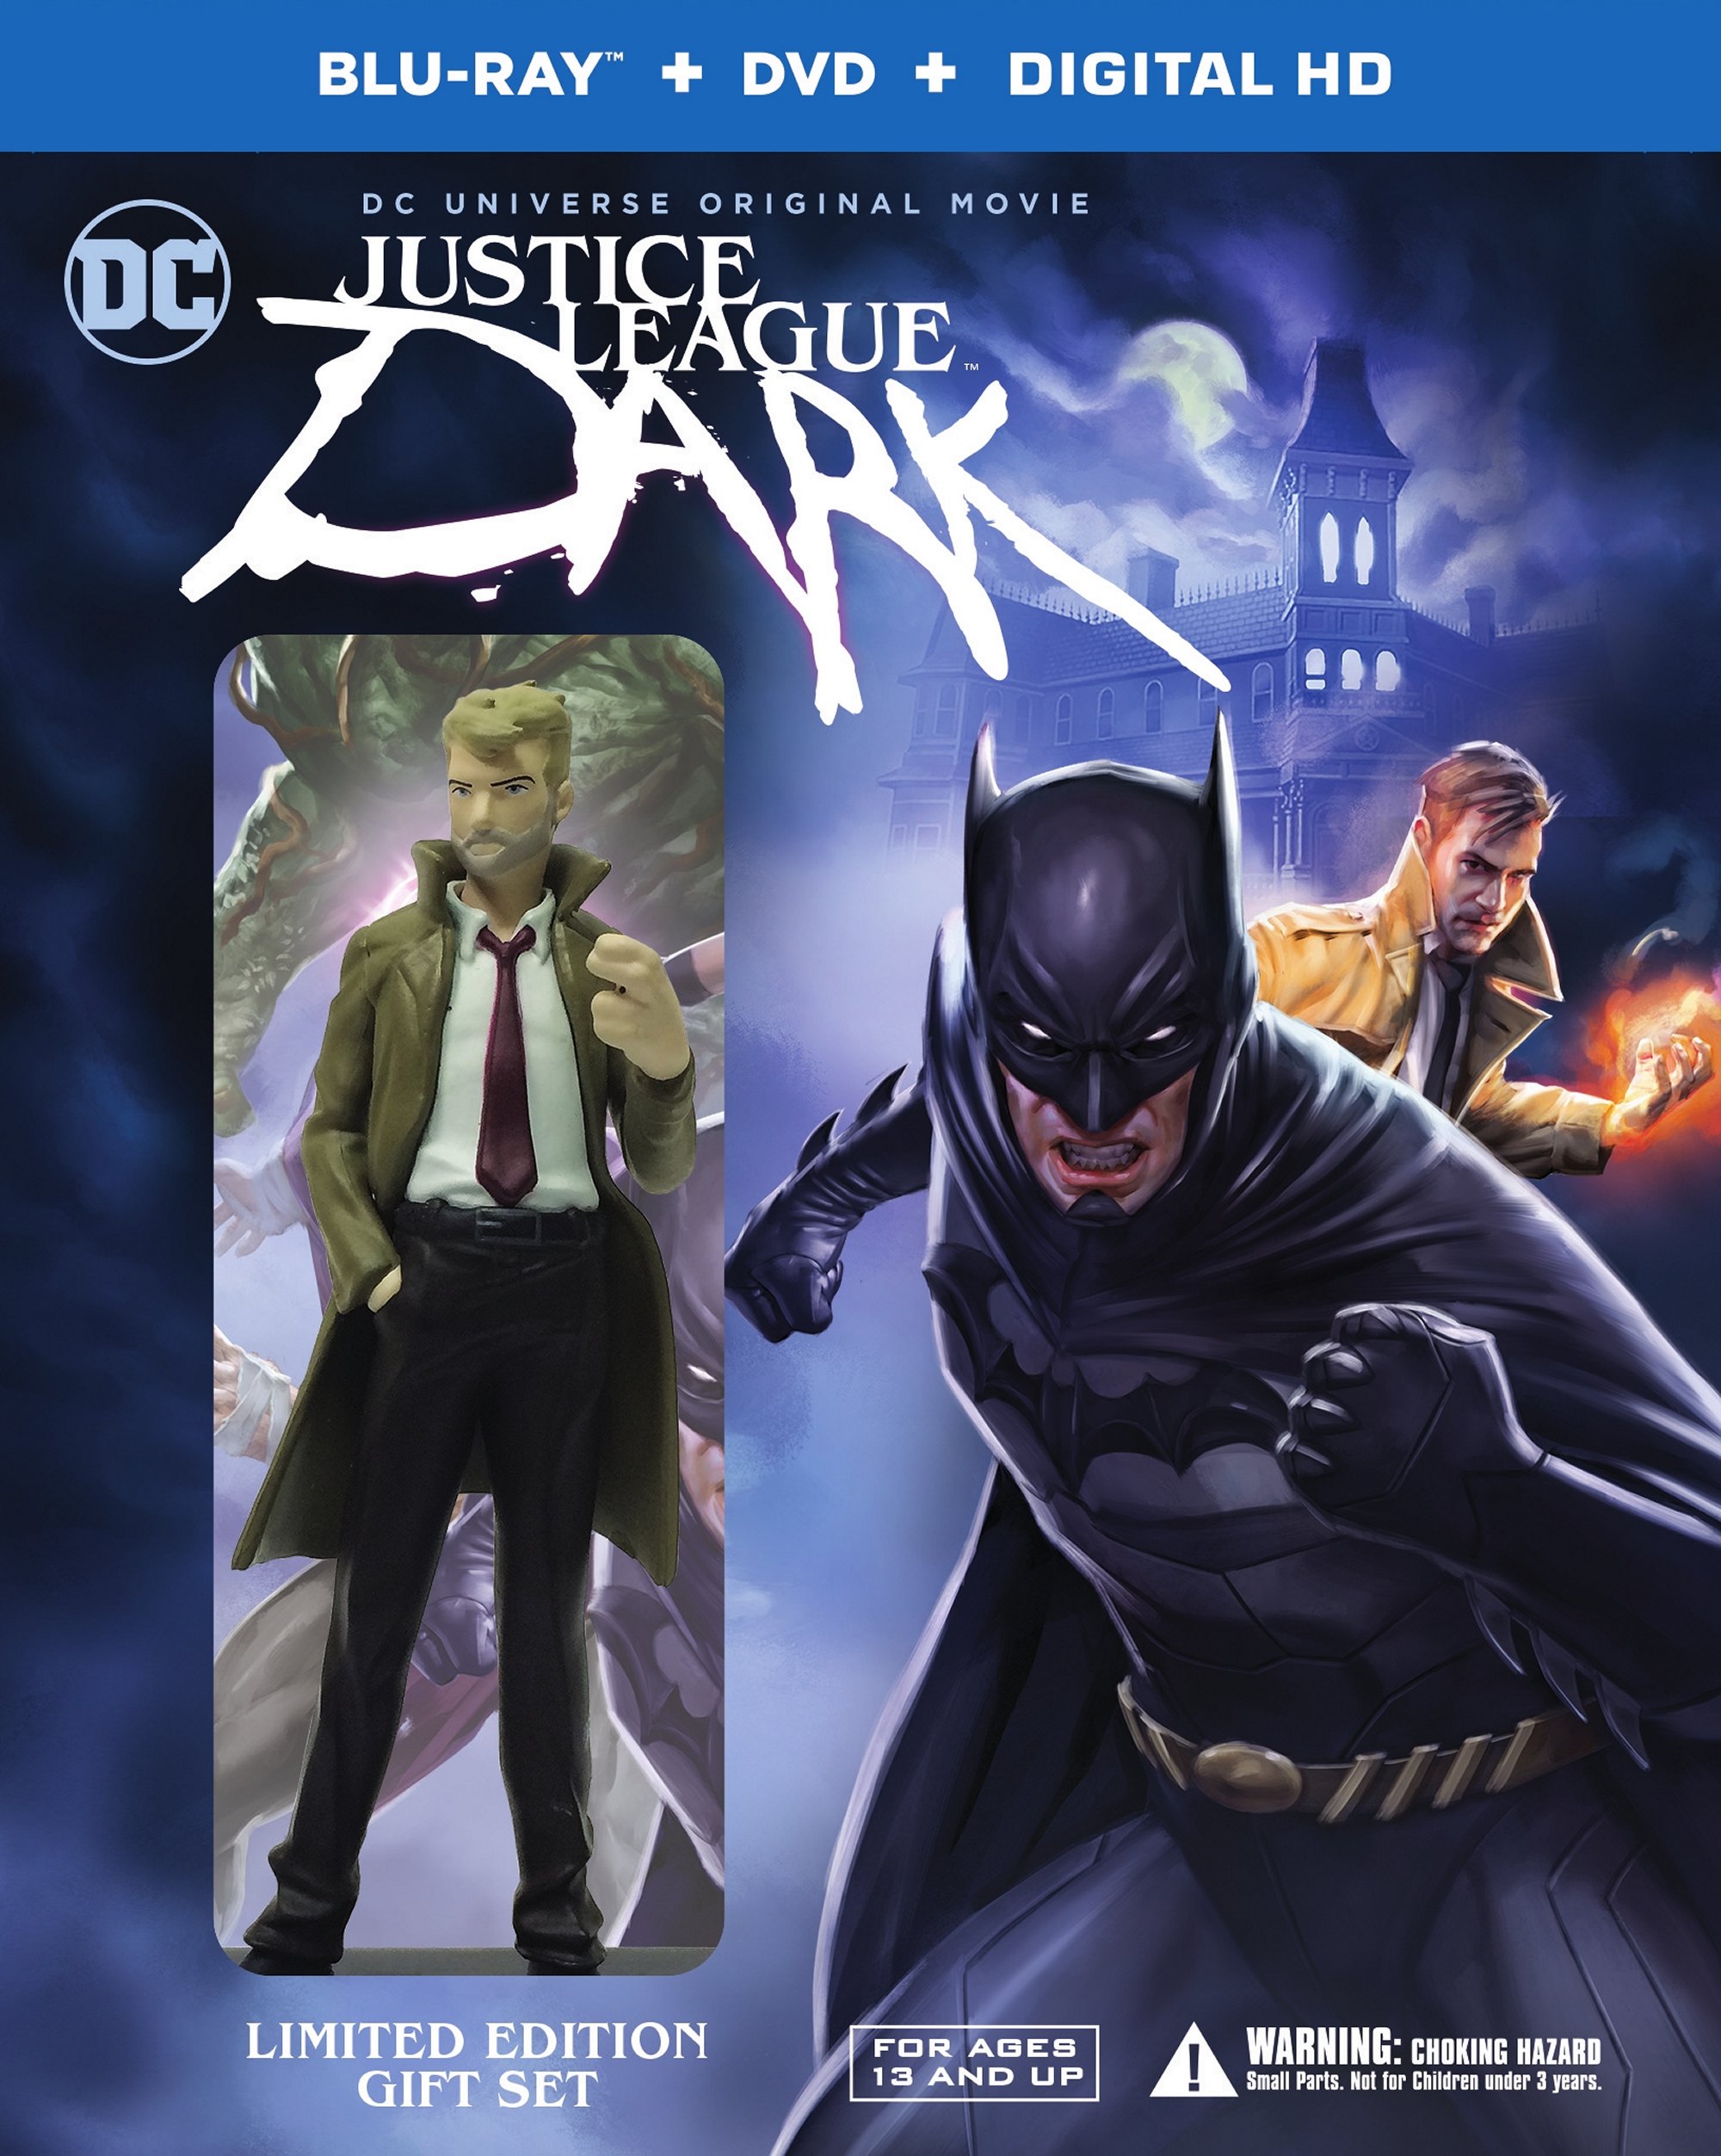 Justice League Dark [Deluxe Edition] [Blu-ray] [2017] - Best Buy